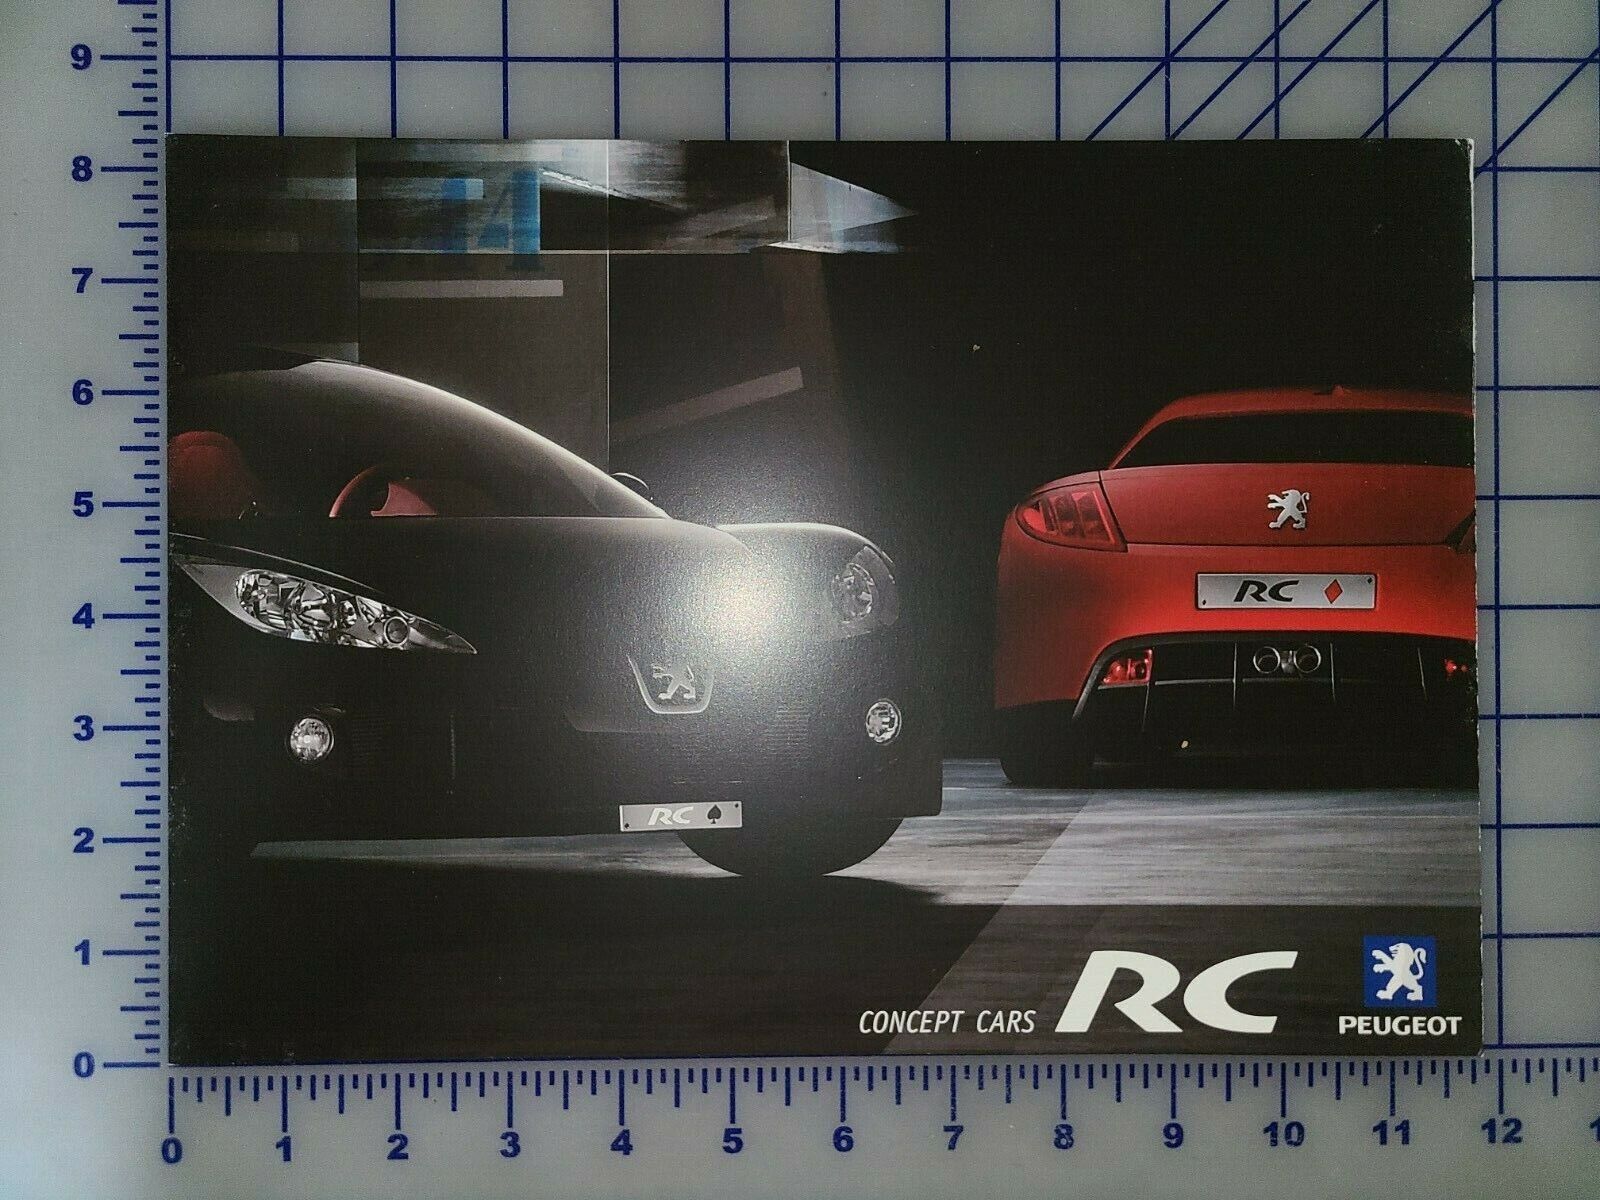 2002 Peugeot RC Concept Car Brochure Folder